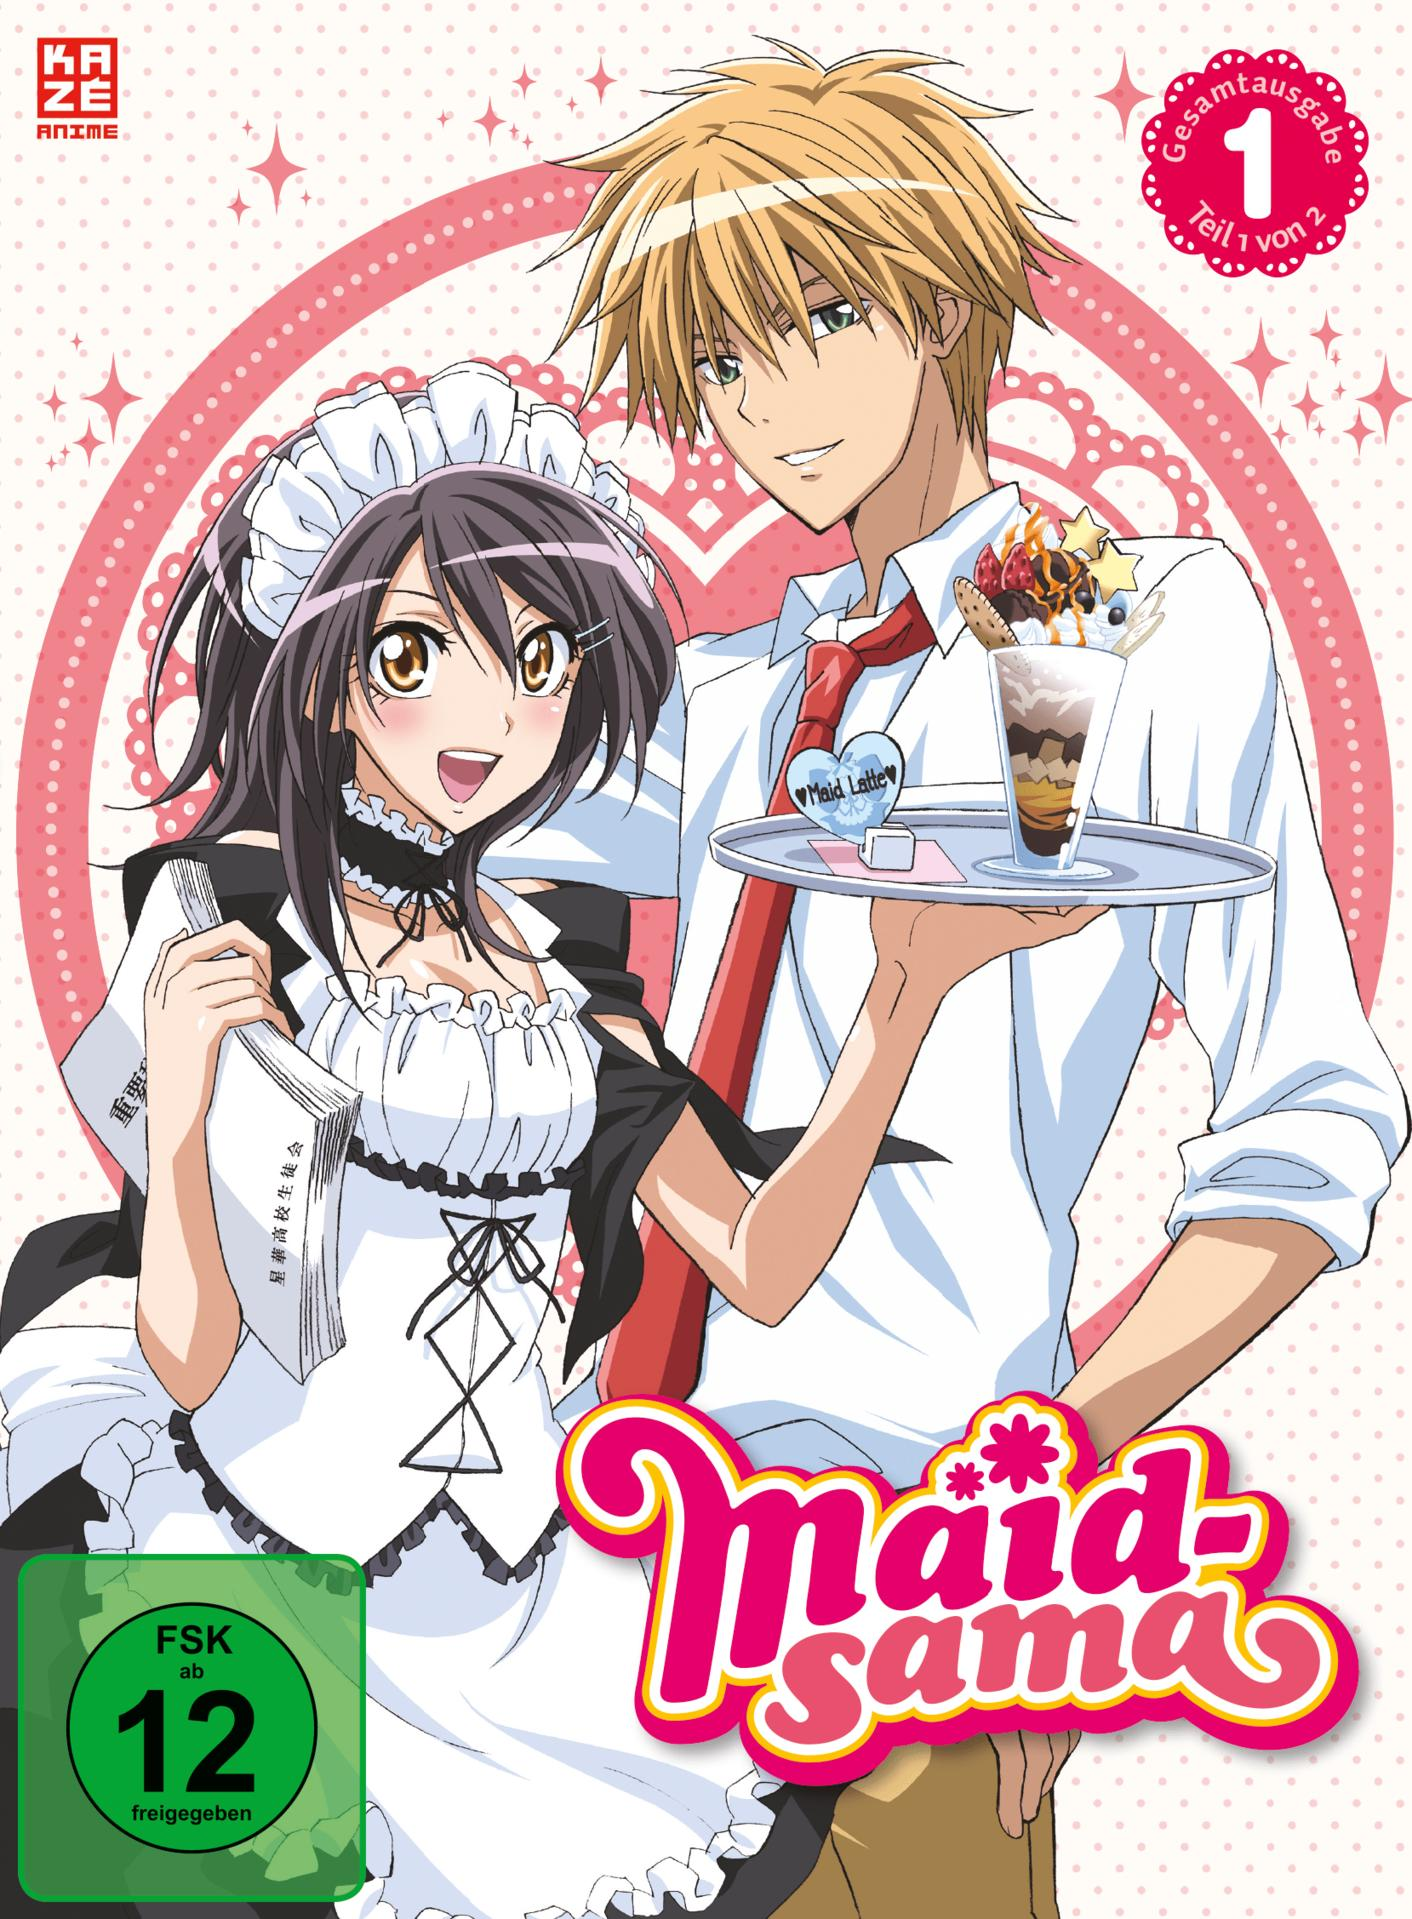 Maid-sama DVD 1 Vol. - Box